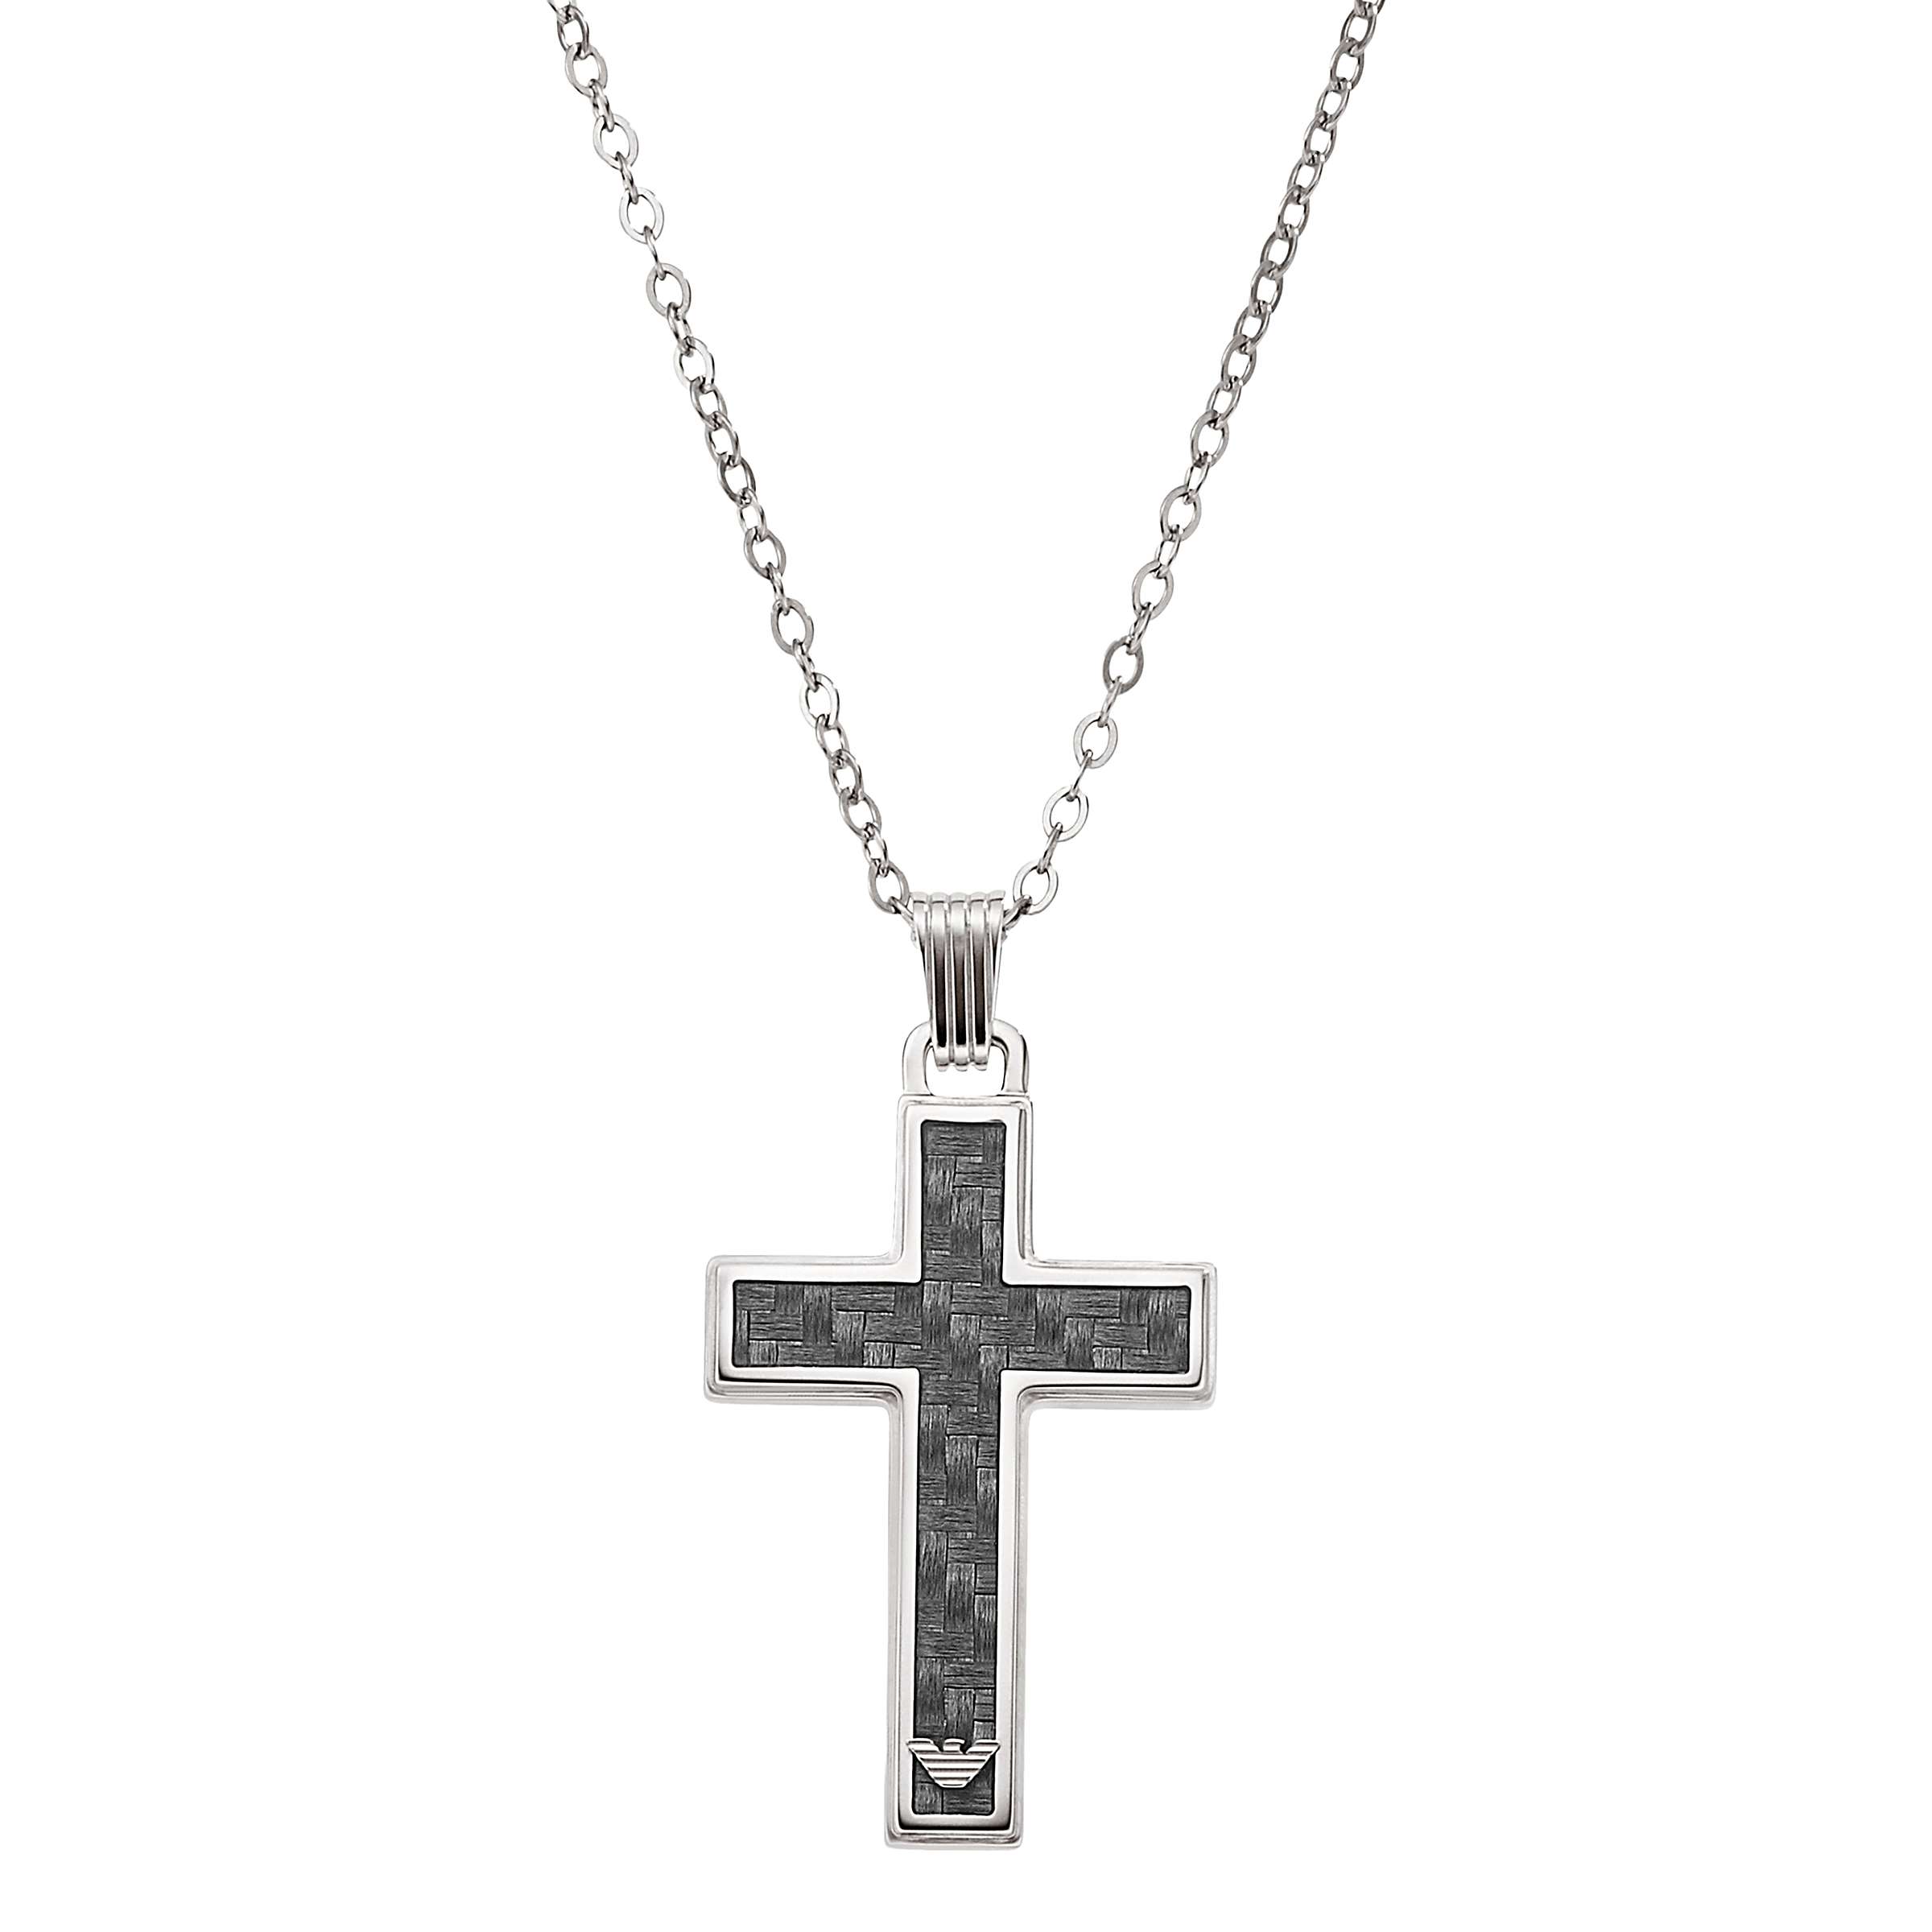 Buy Emporio Armani Men's Cross Necklace, Black/Silver Online at johnlewis.com